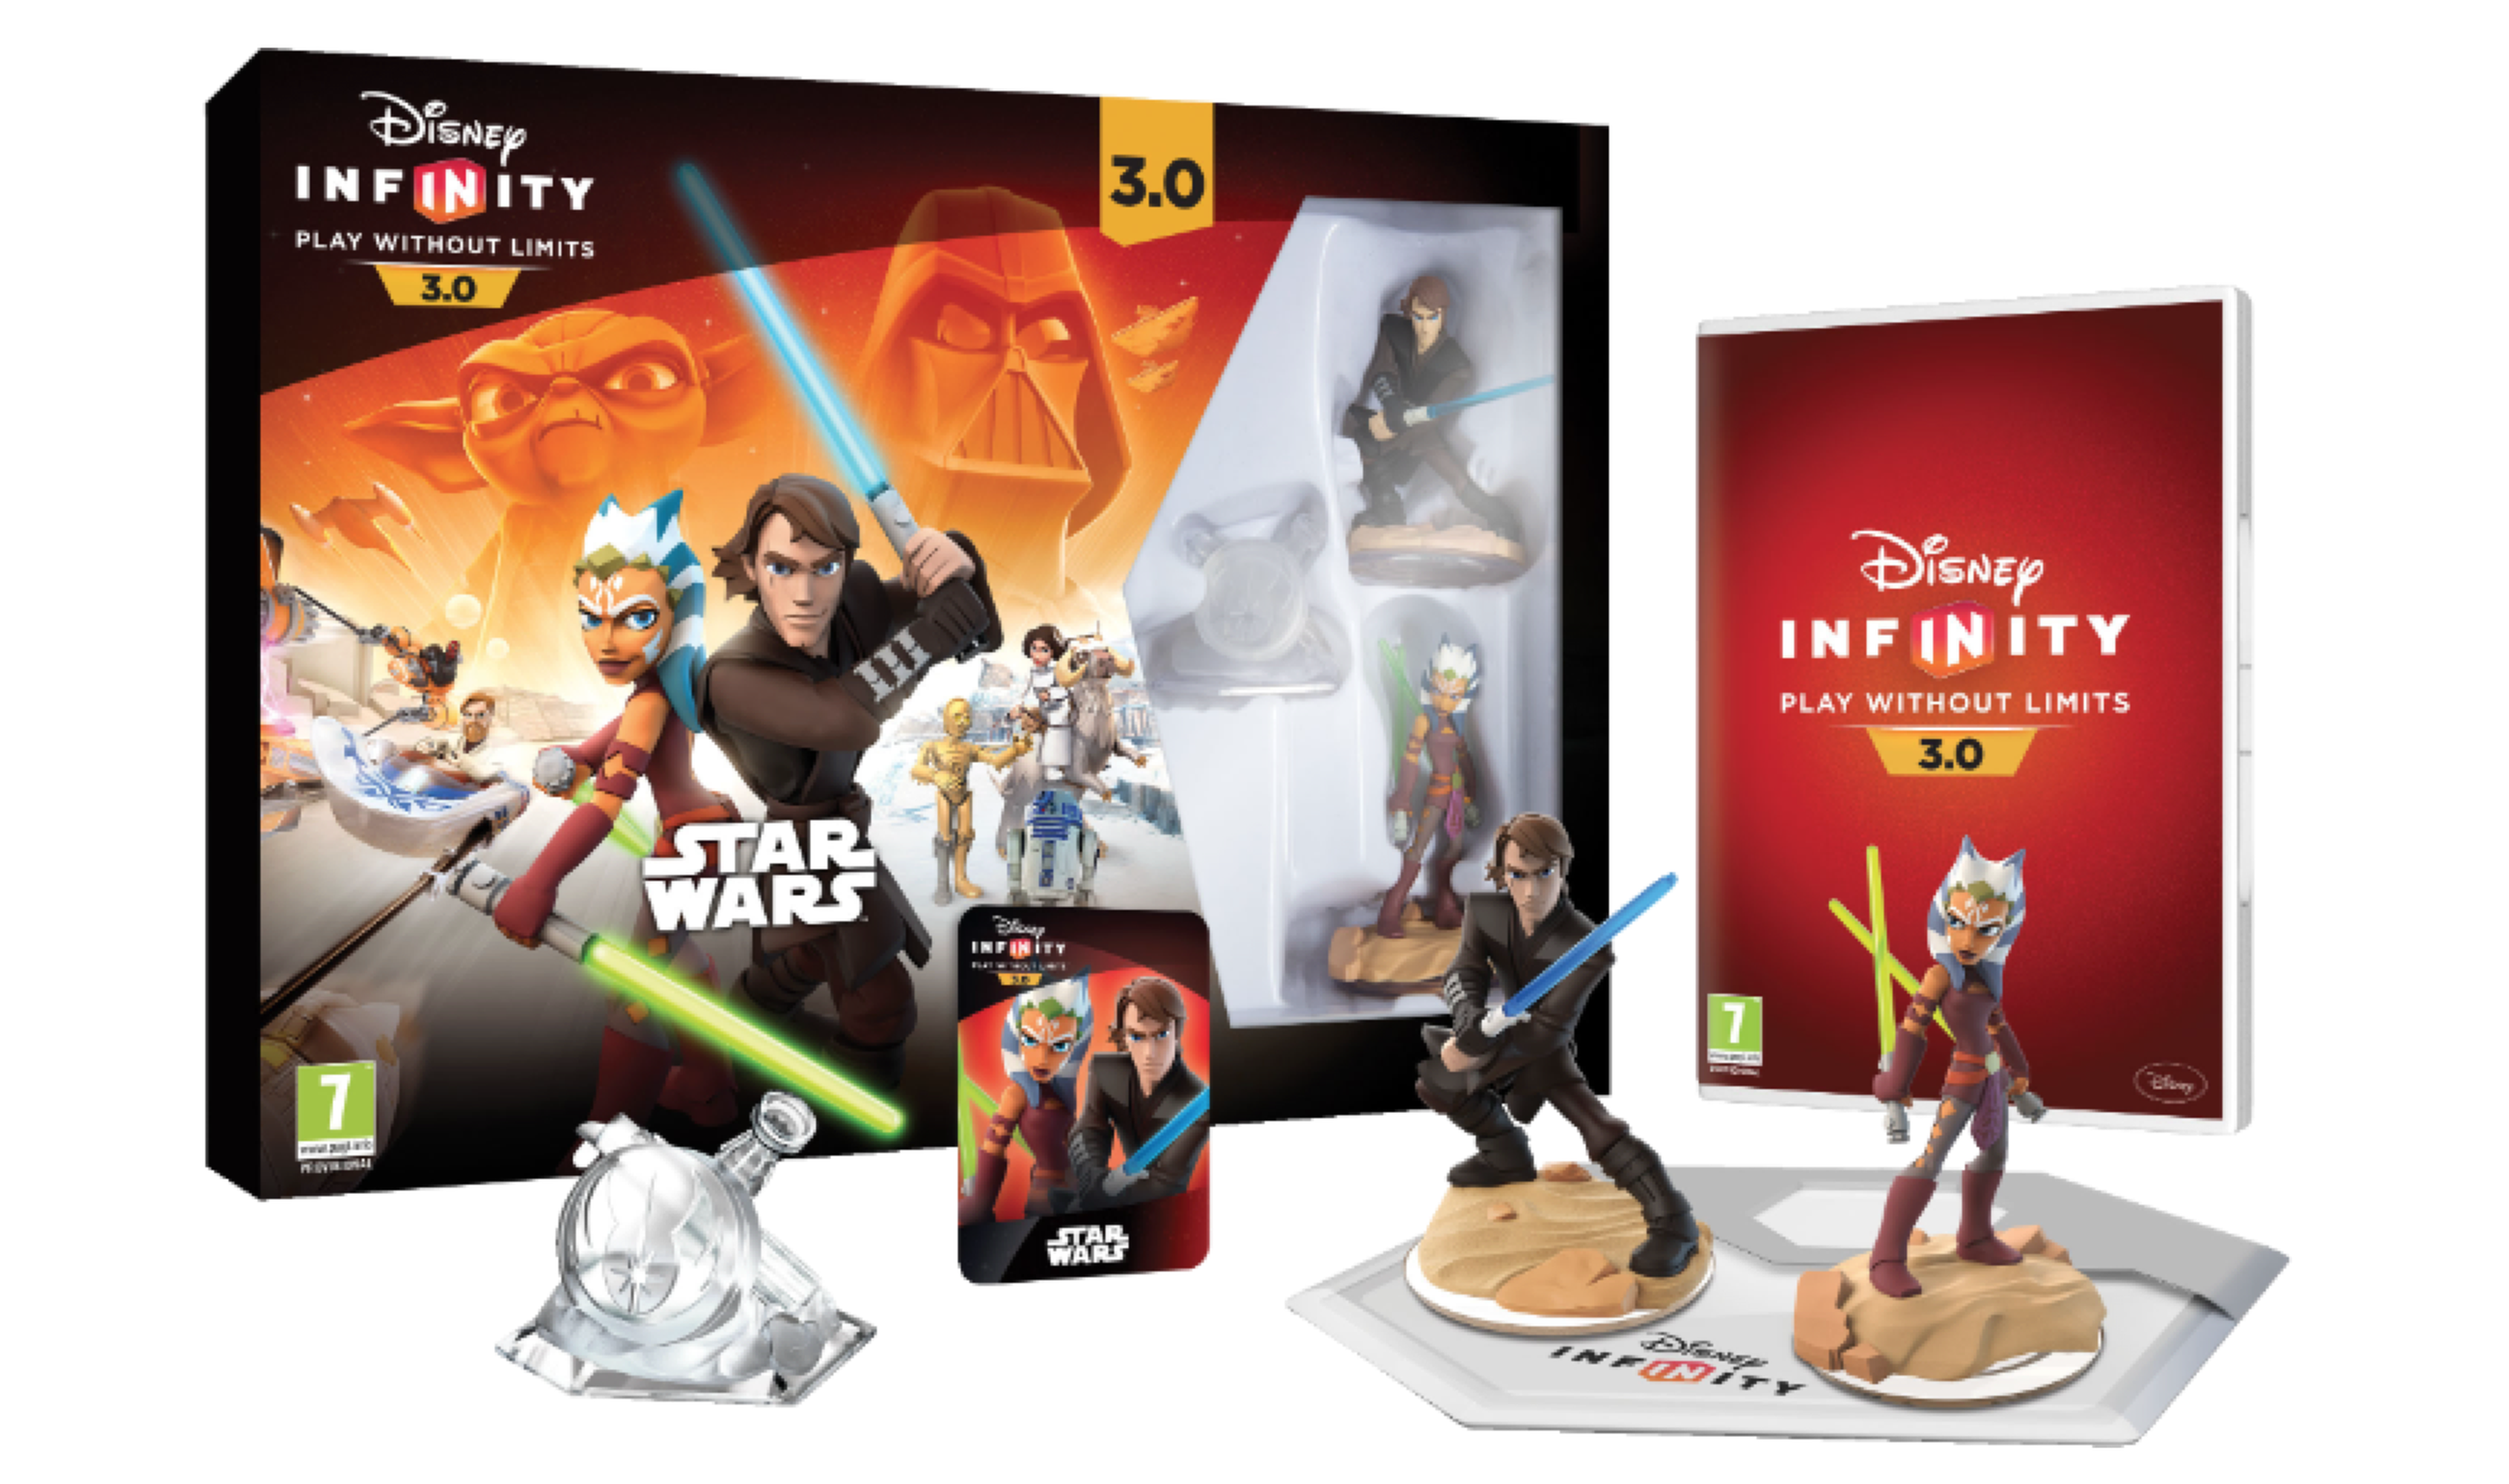 Disney Infinity 3.0: Star Wars parece confirmarse